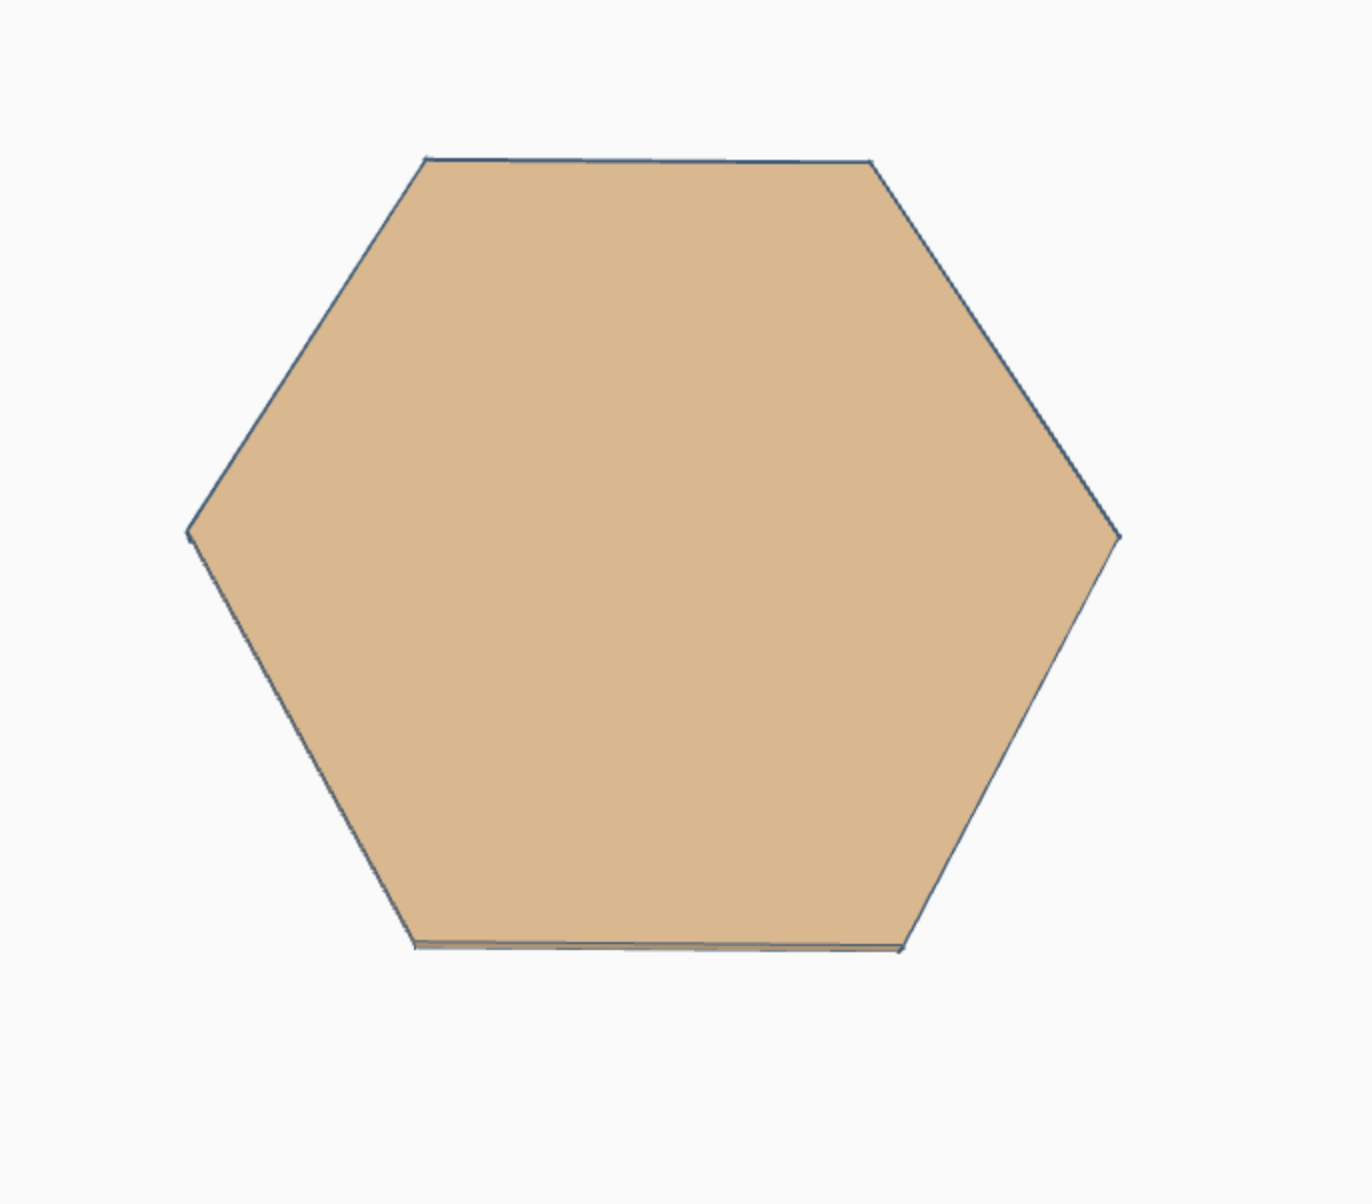 Meg’s Magic cookie kit - Hexagon - Pack of 4 + cutter - FAKE COOKIES